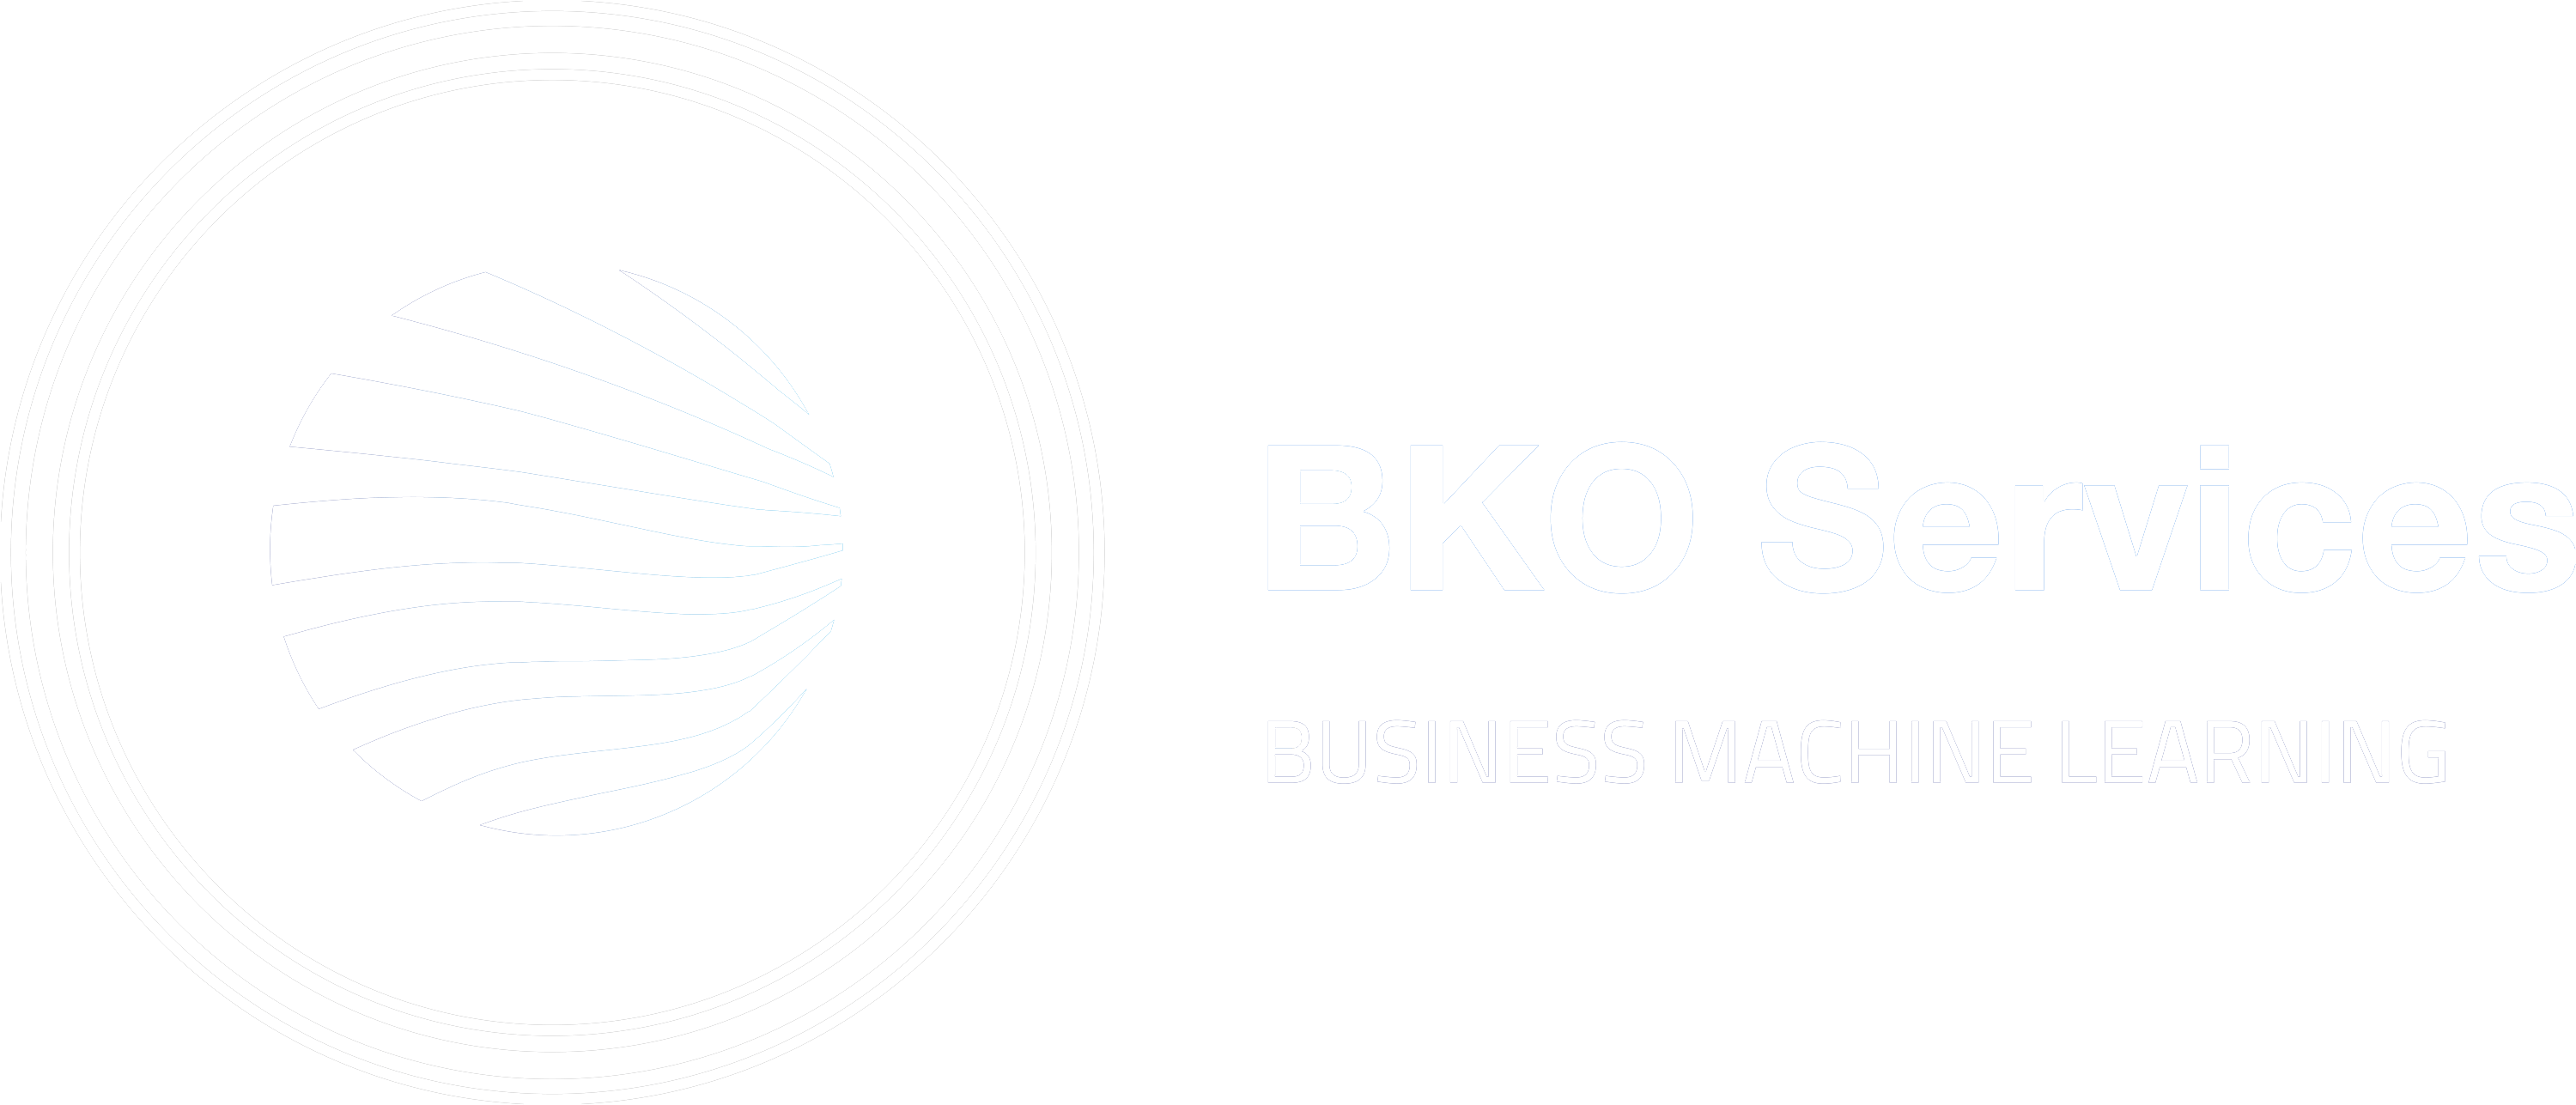 Bko Services Logo Wh logo